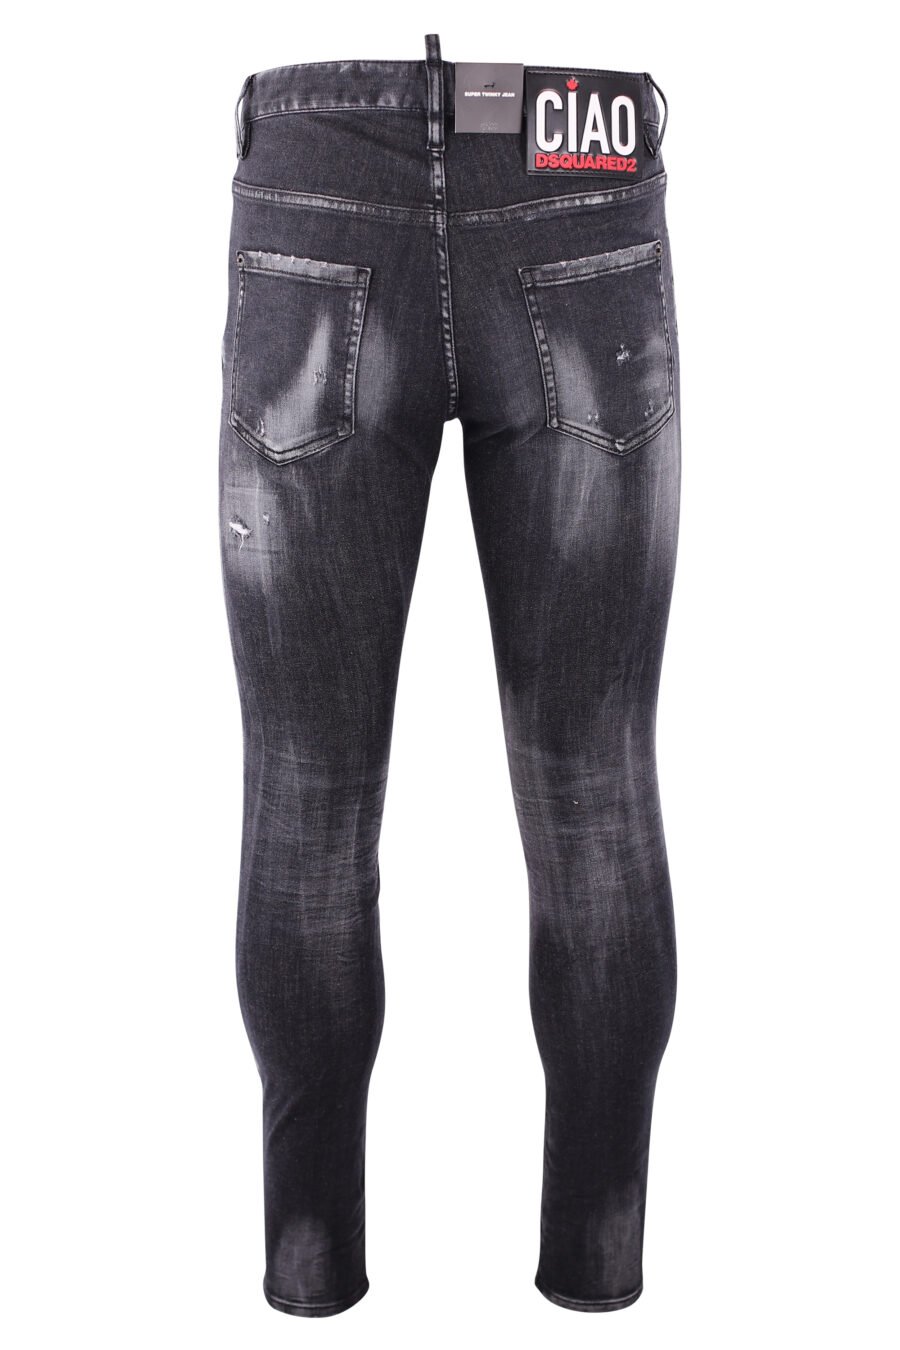 Super twinkie" jeans black frayed with black "D2" logo - IMG 3253